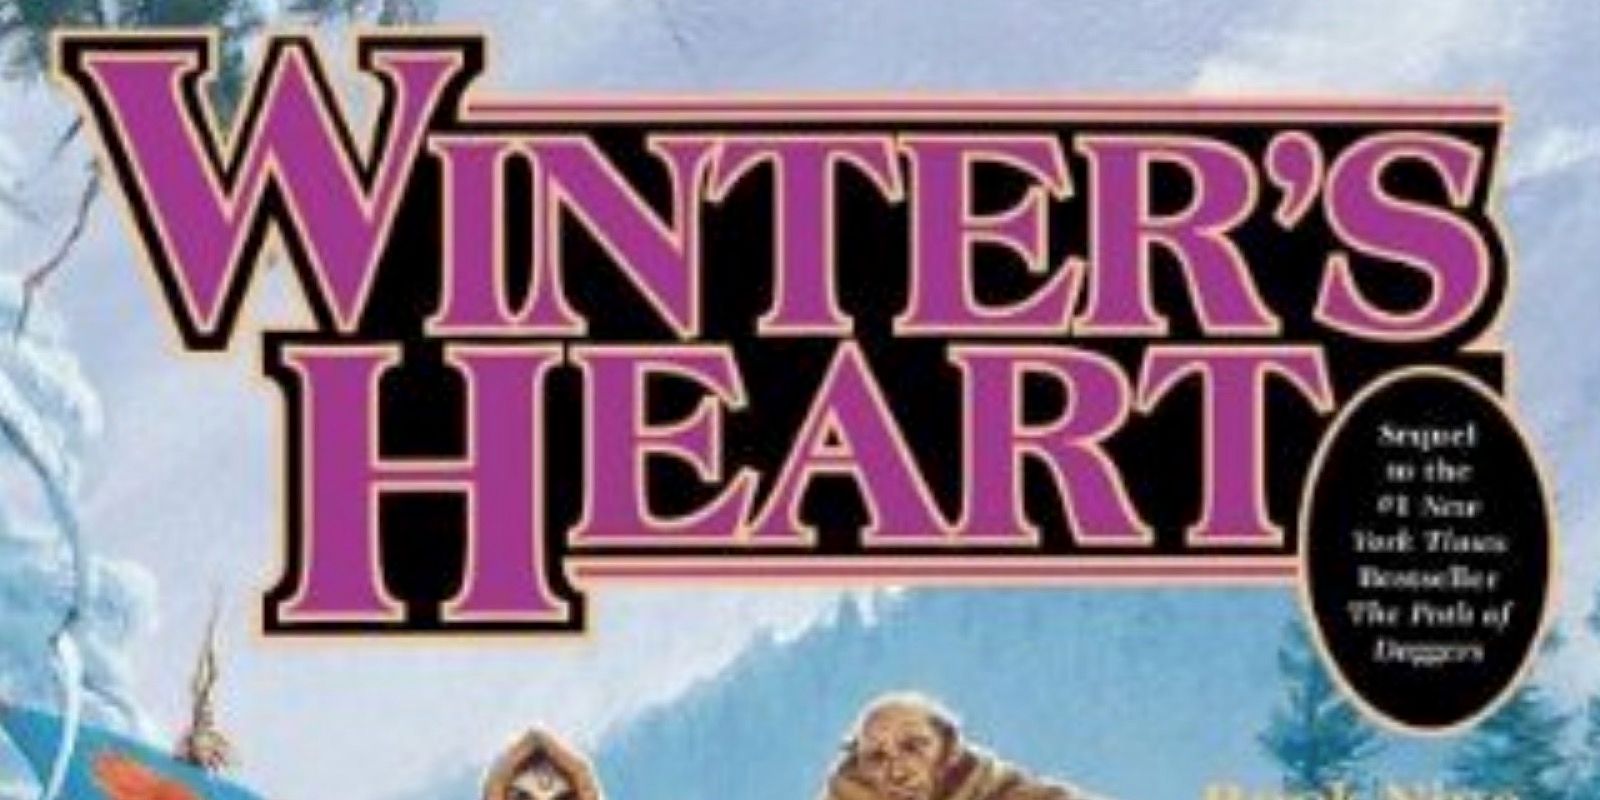 The cover of Winter's Heart by Robert Jordan.